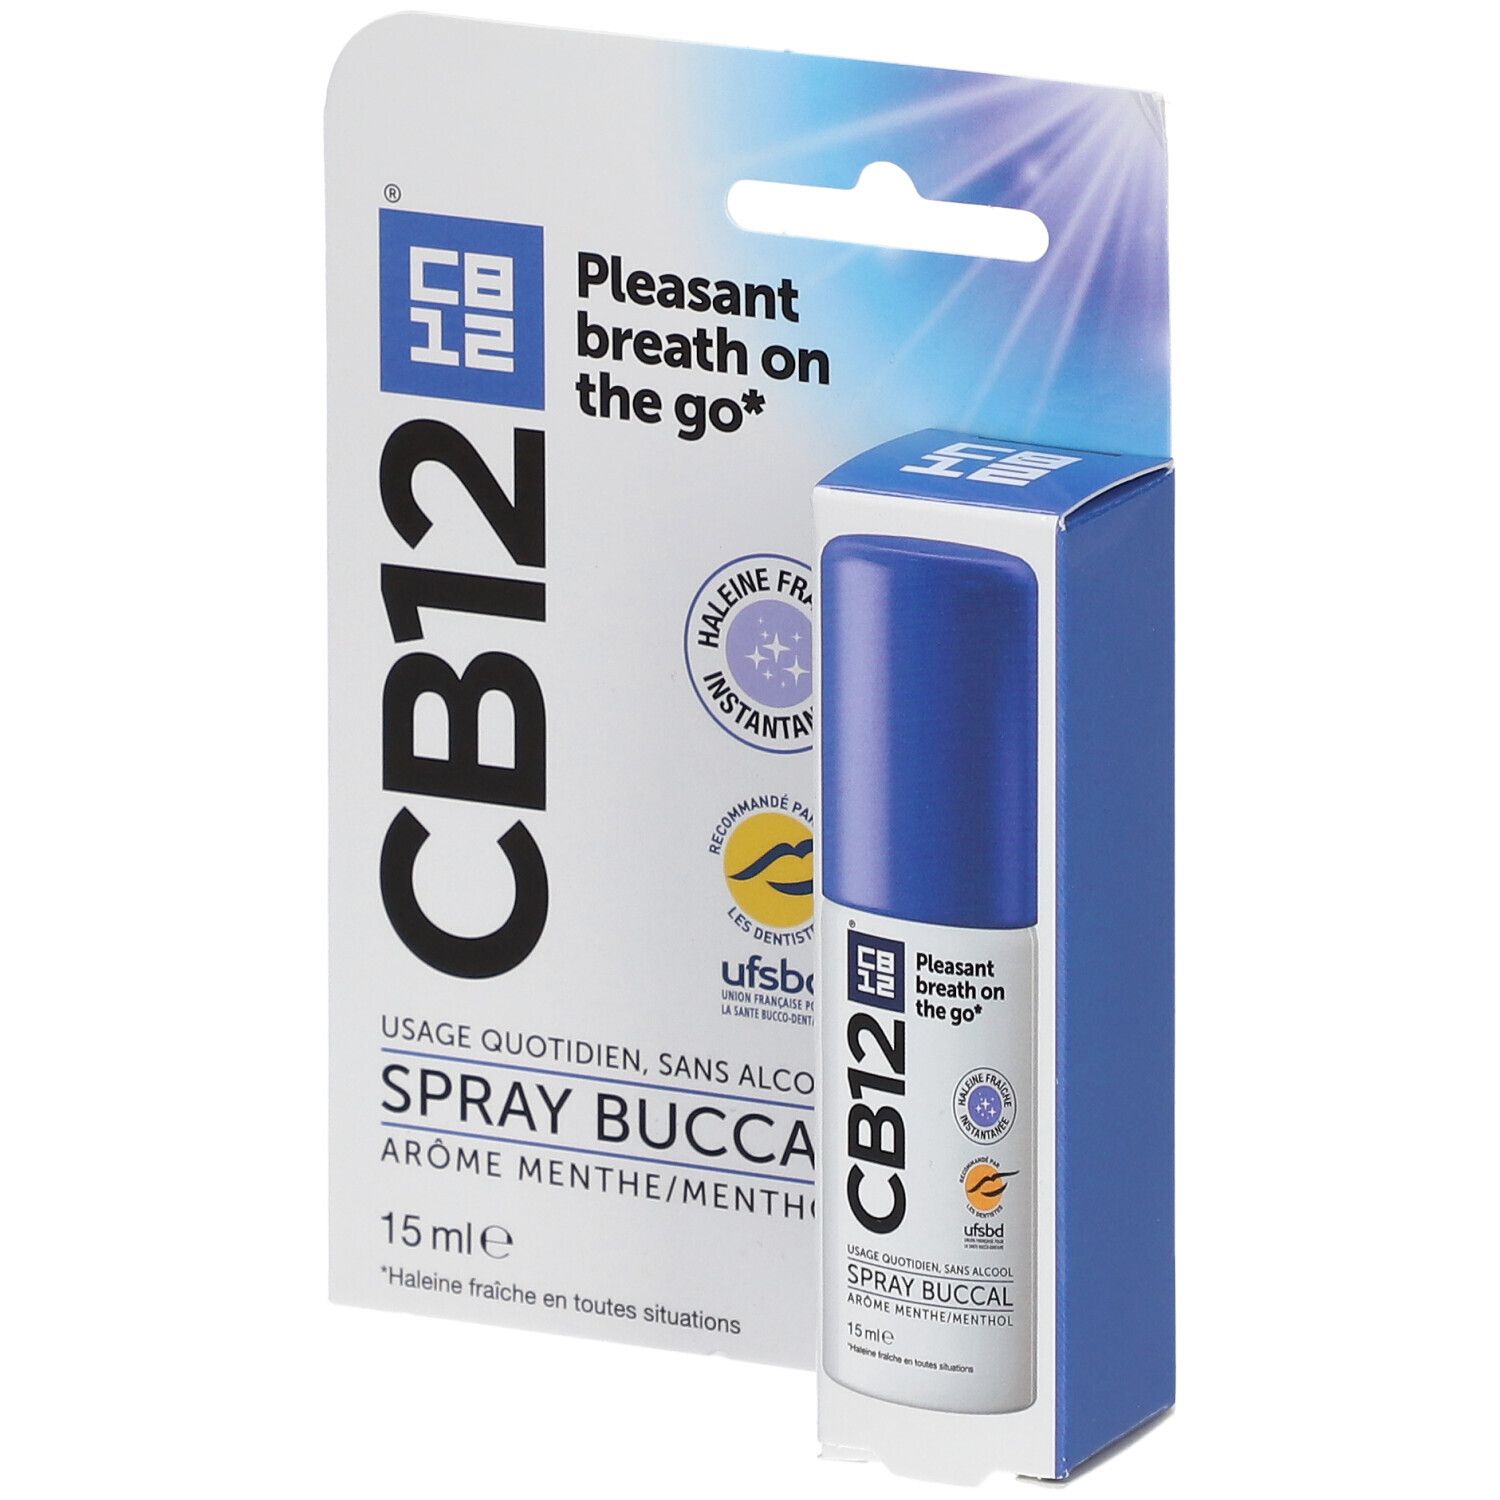 Cb12 Spray buccal